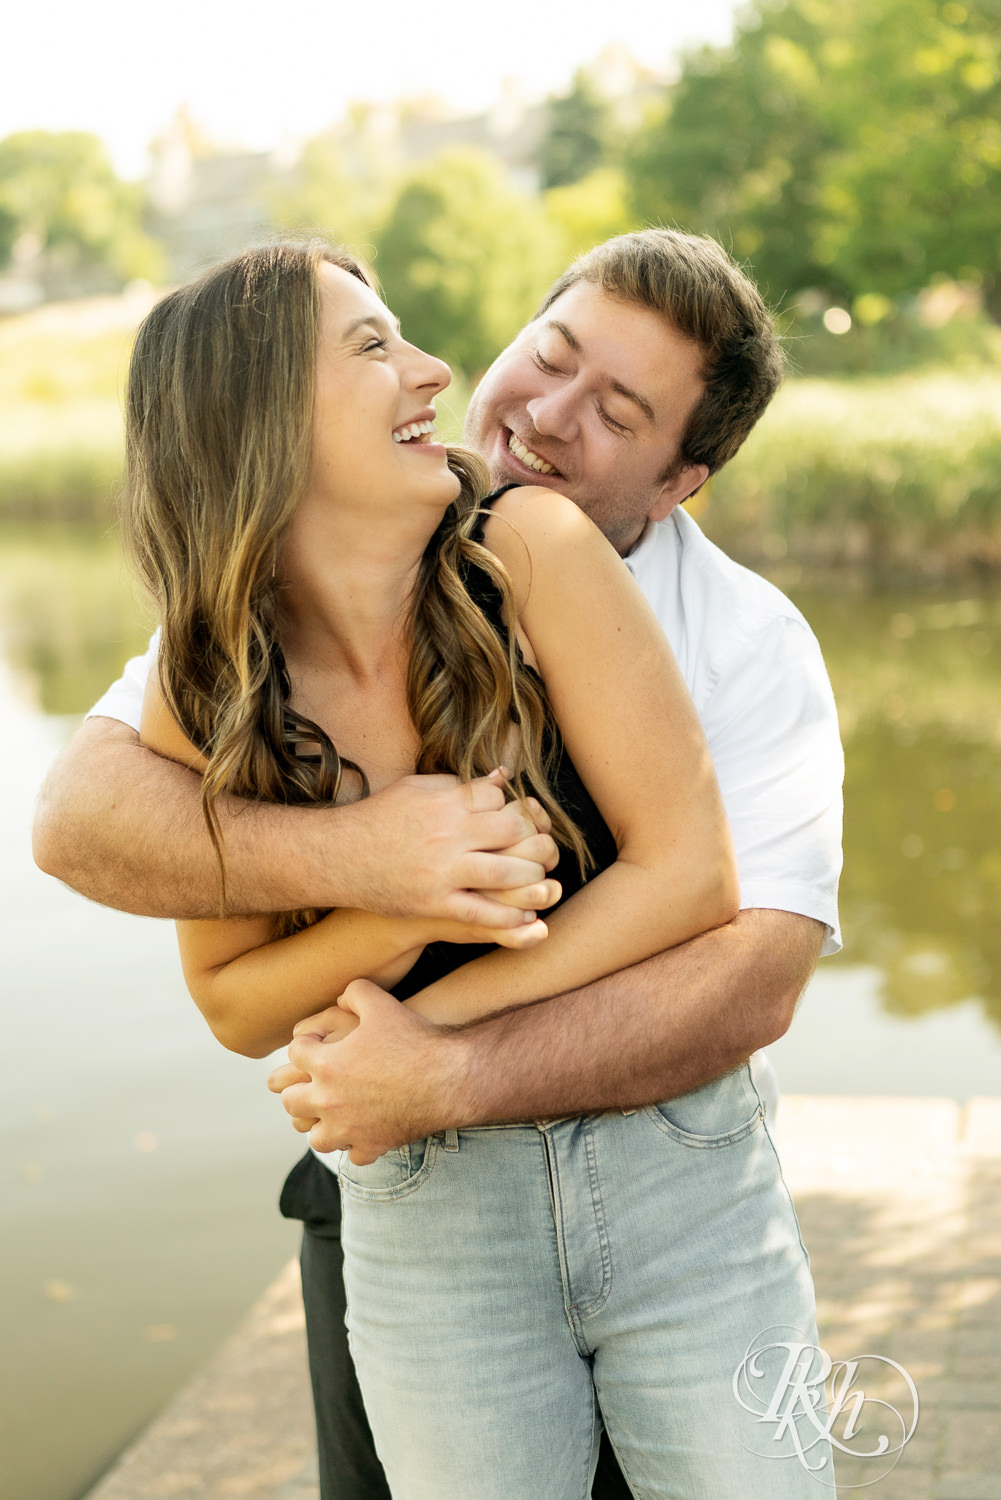 Man and woman laugh during engagement photography at Centennial Lakes Park in Edina, Minnesota.